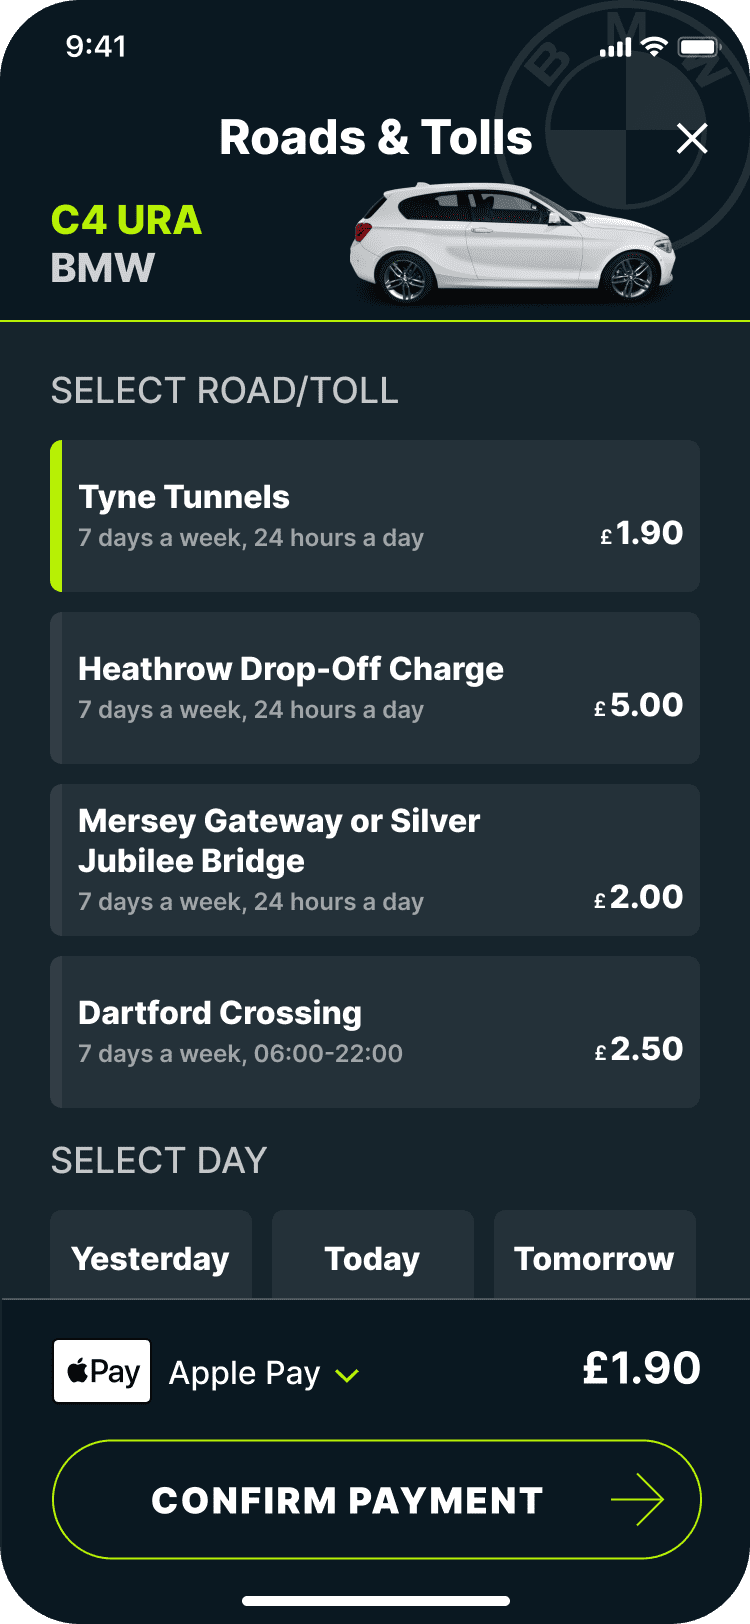 Tyne Tunnels payment screen on Caura app